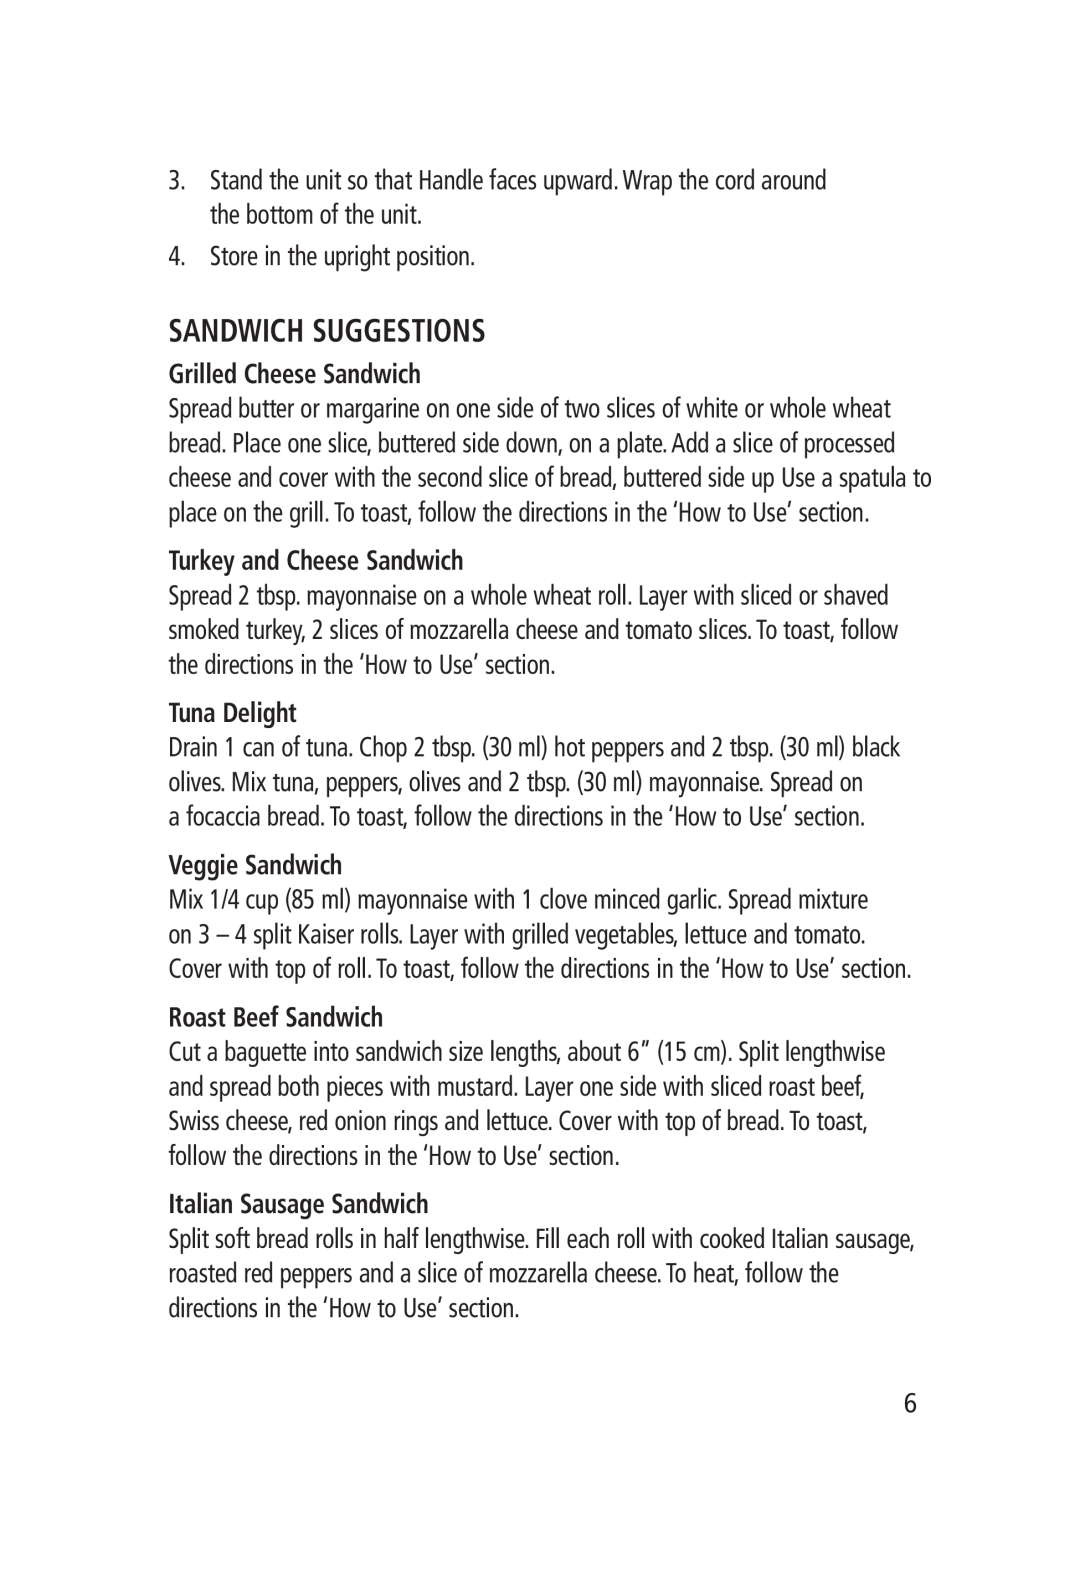 Salton SG-1207 Sandwich Suggestions, Grilled Cheese Sandwich, Turkey and Cheese Sandwich, Tuna Delight, Veggie Sandwich 